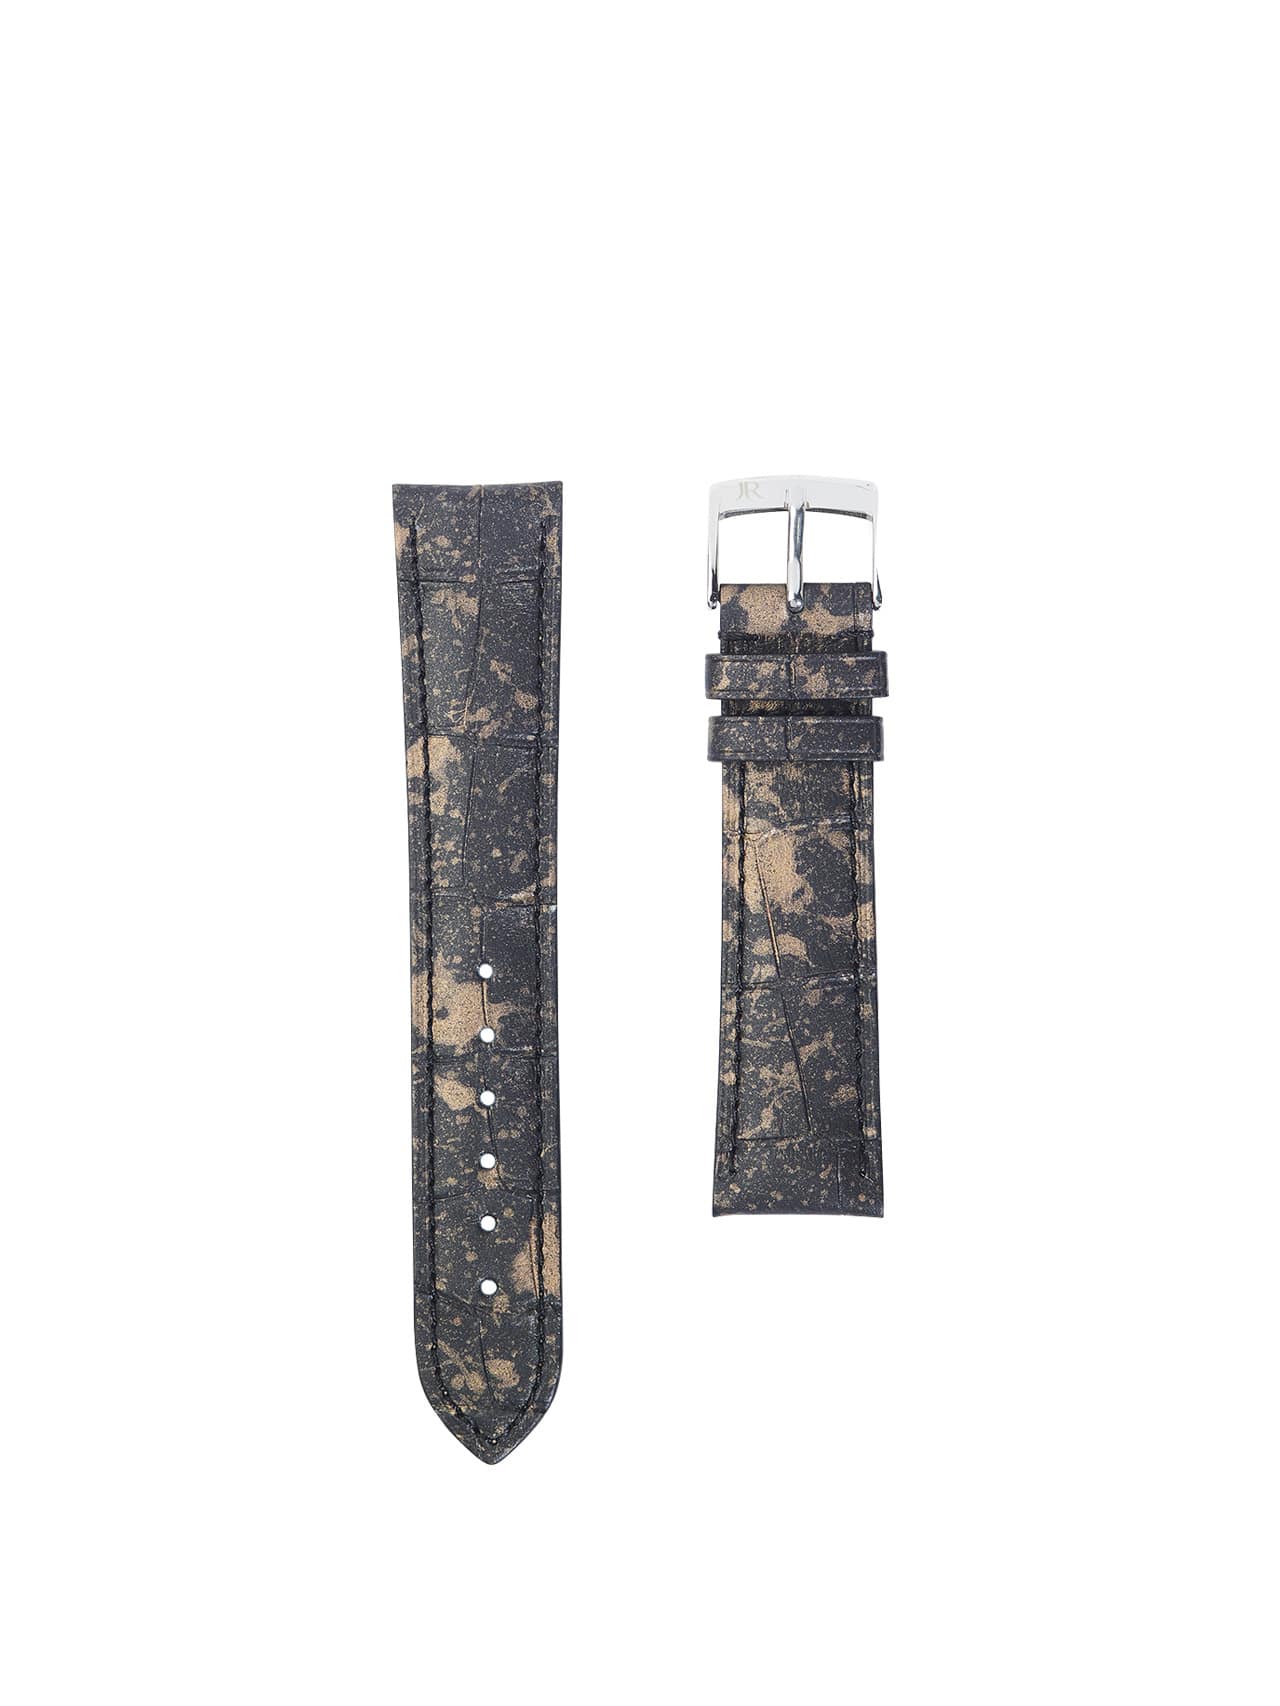 Watch strap 3.5 Asteria rubber touch crocodile bronze front